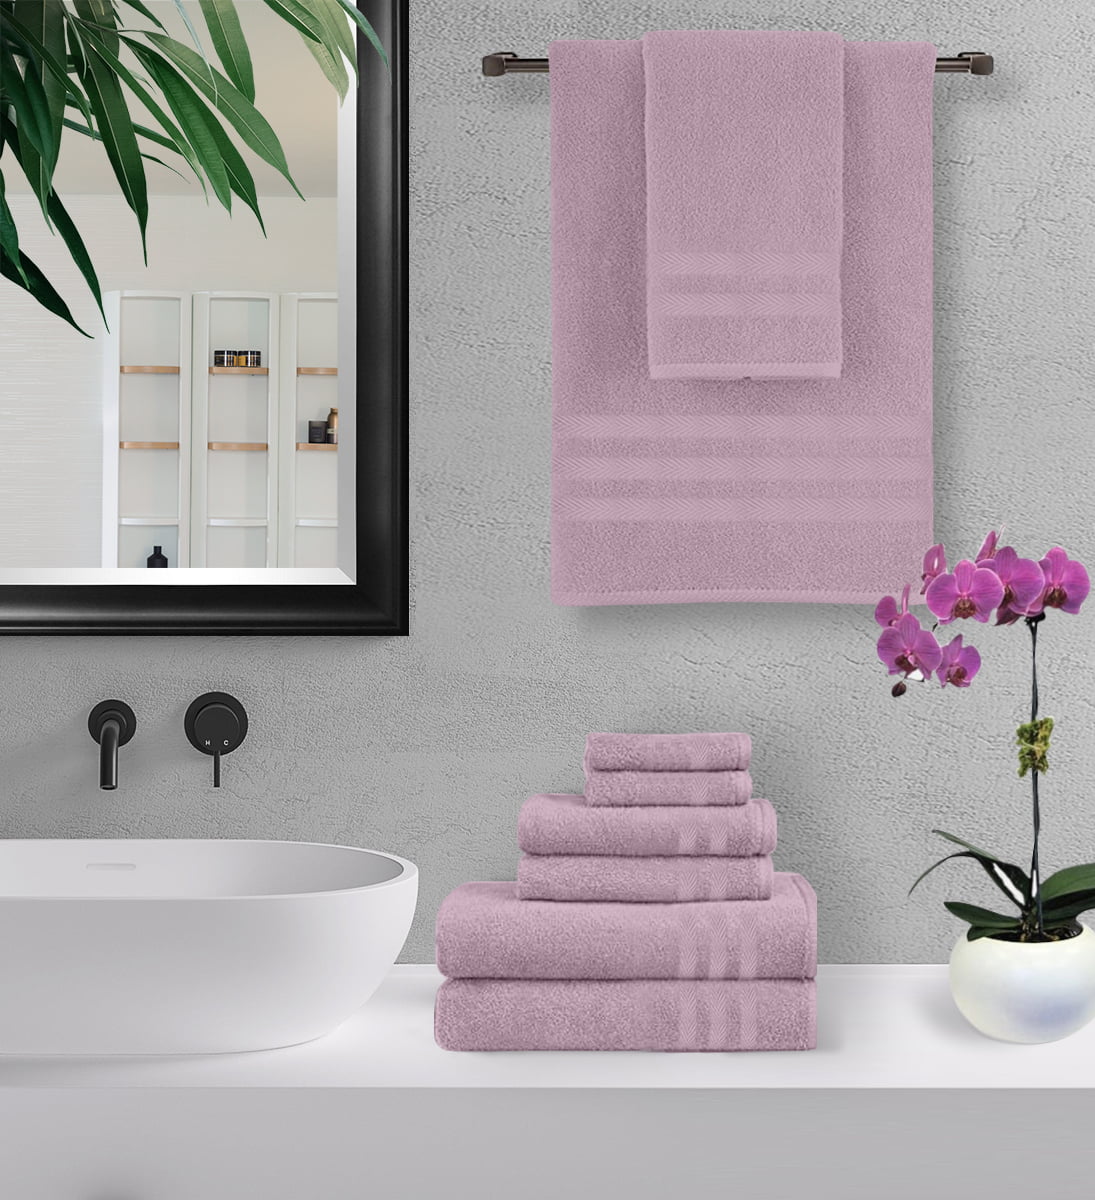 Basics 6-Piece Fade Resistant Bath towel, Hand and Washcloth Set -  Cotton, Gray, 14.25 L x 10.85 W